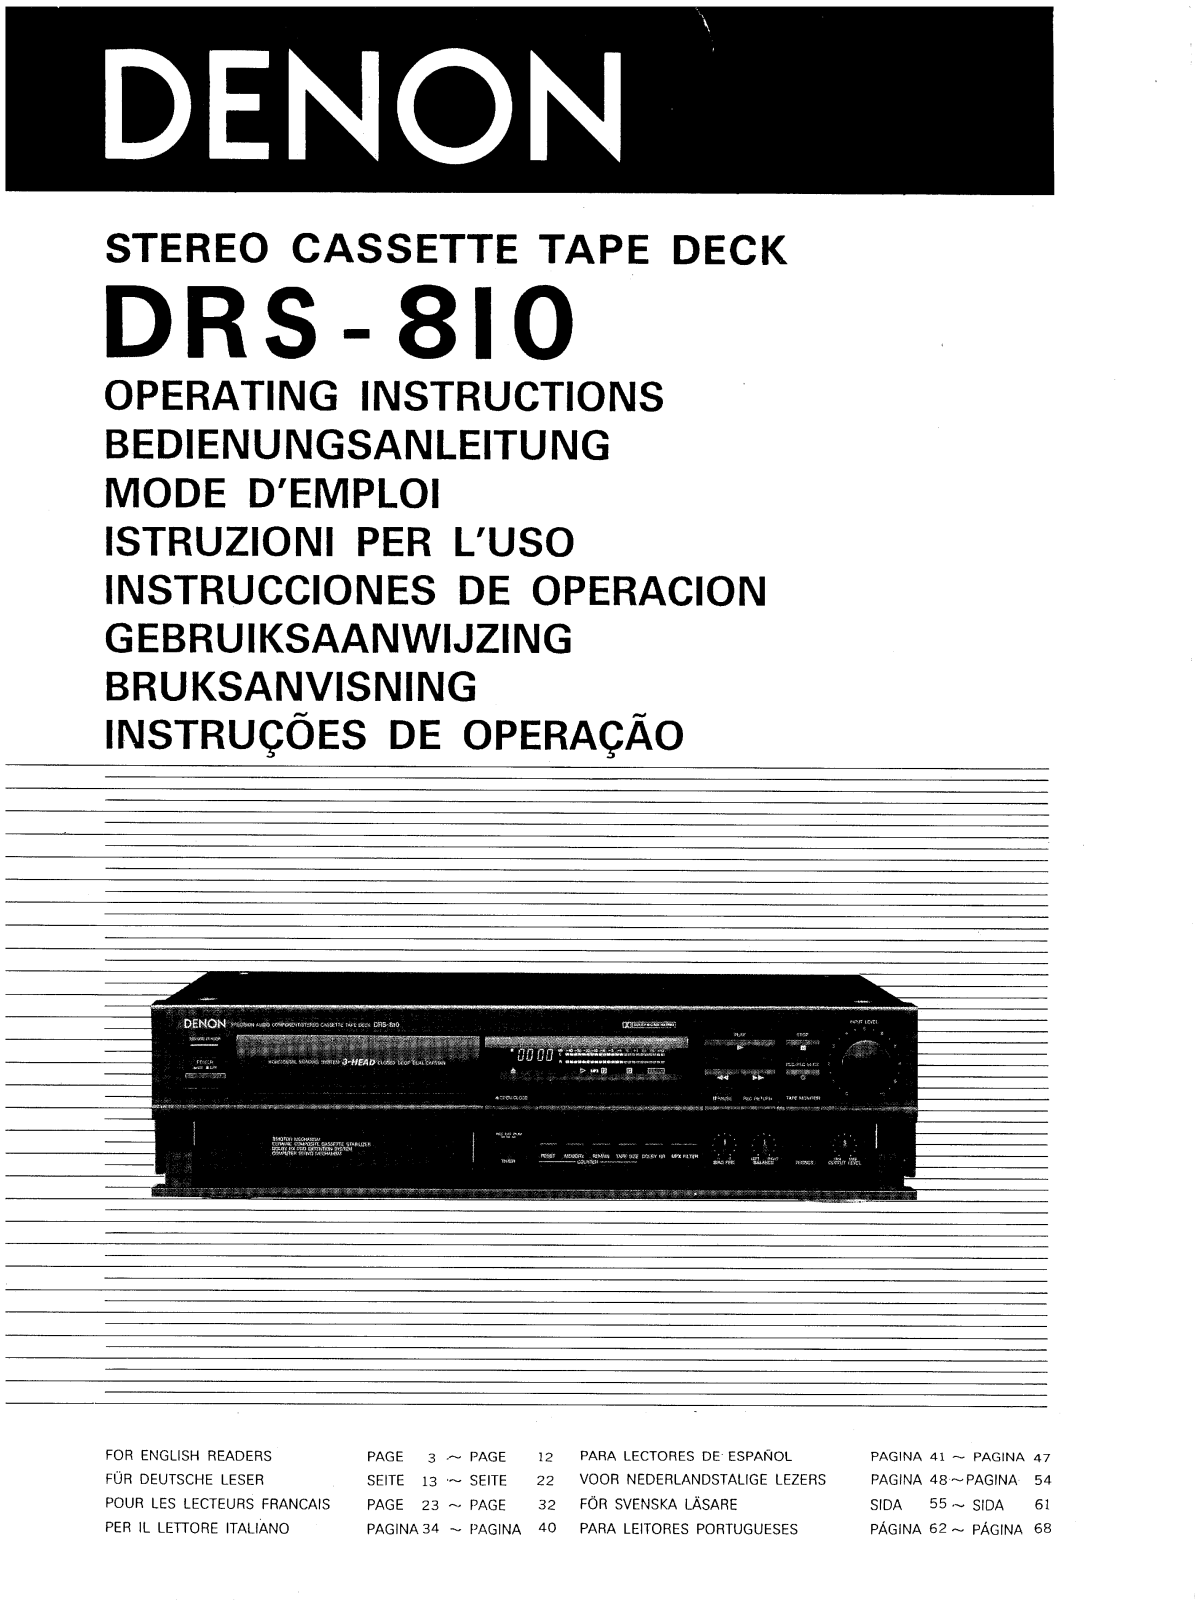 Denon DRS-810 Owner's Manual